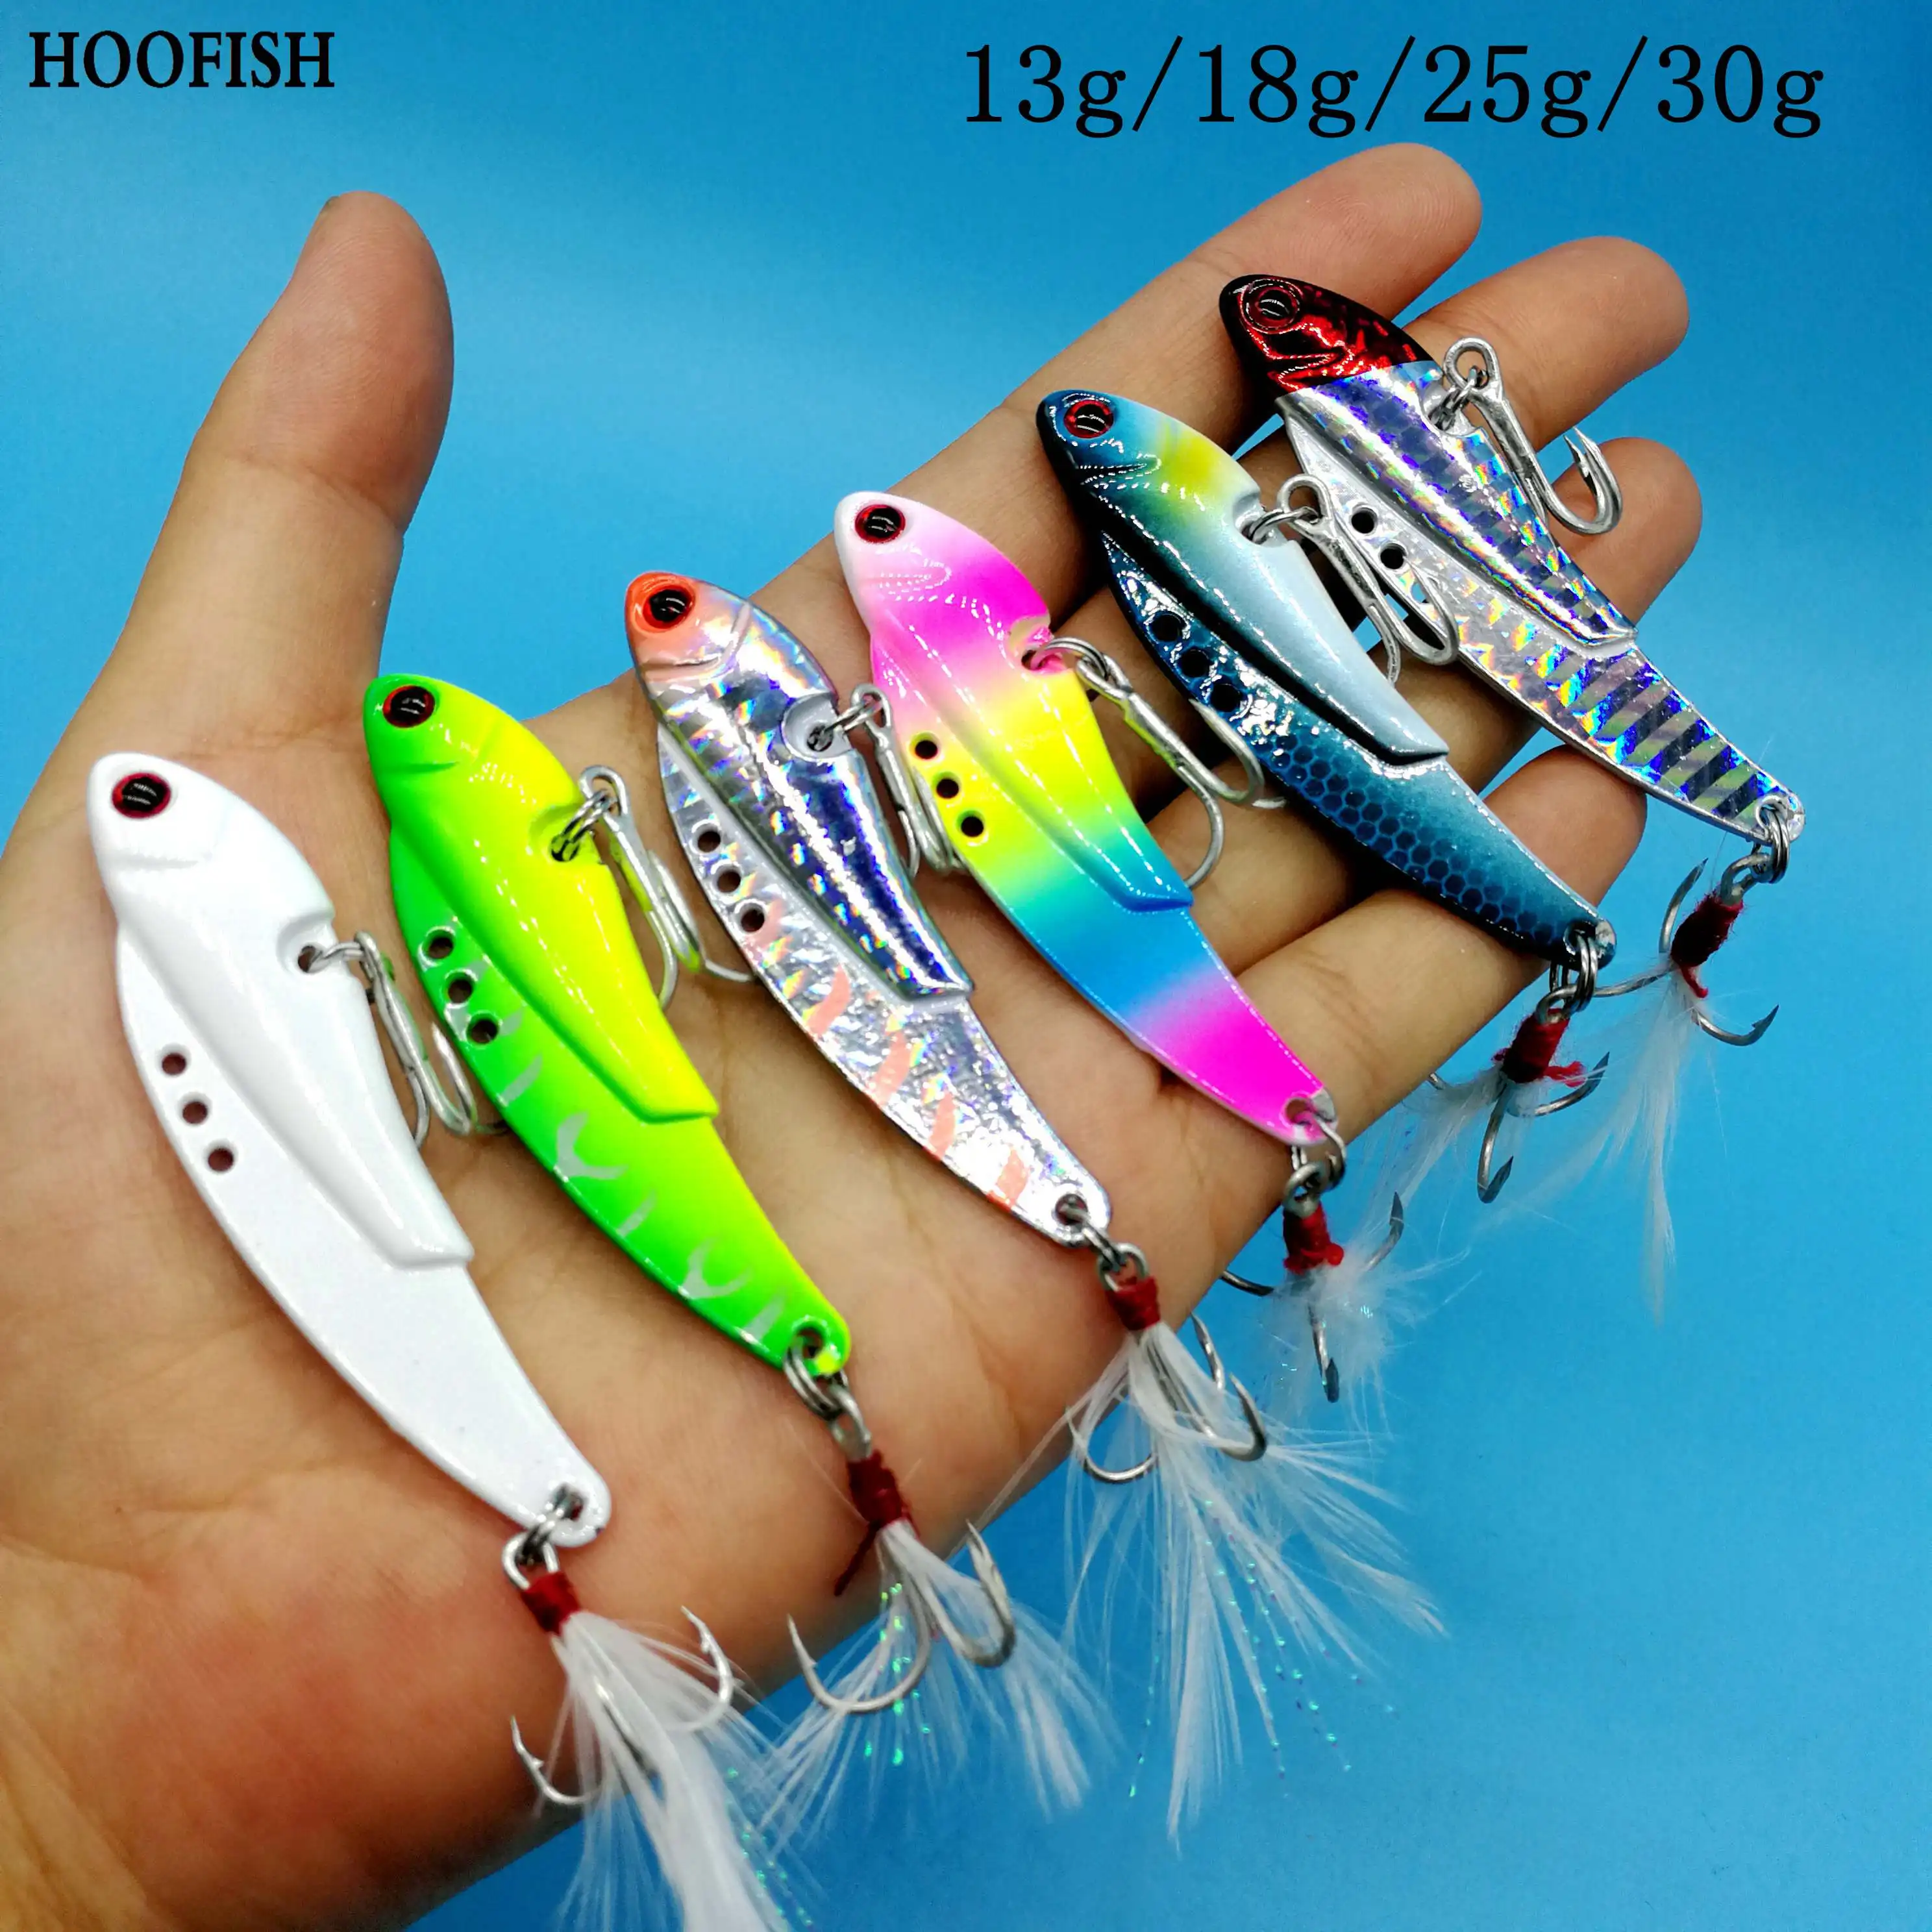 HOOFISH 12PCS/LOT Metal Fishing Lure Jig  Bait 13g/18g/25g/30g  Vibration Spoon HardBait With Feather Hooks Wobbler Swimbait VIB